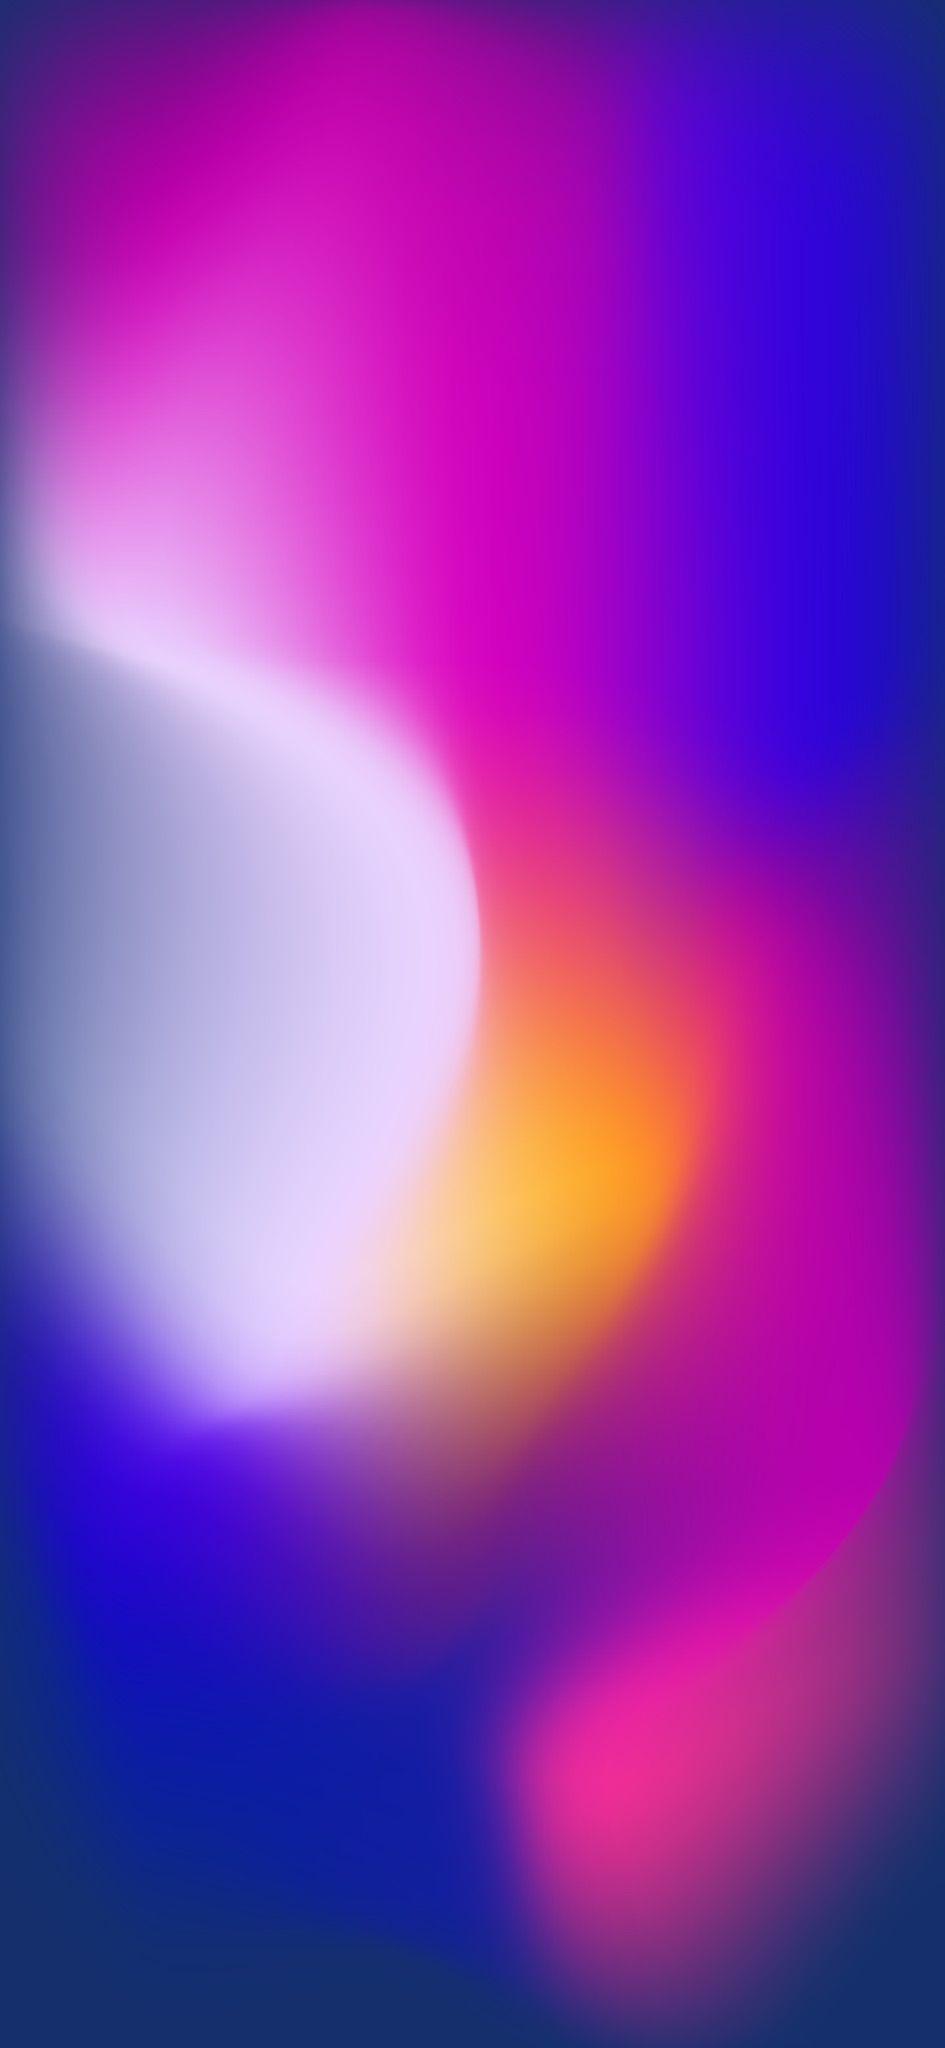 colors.a blur of colors. iPhone wallpaper, Mobile wallpaper